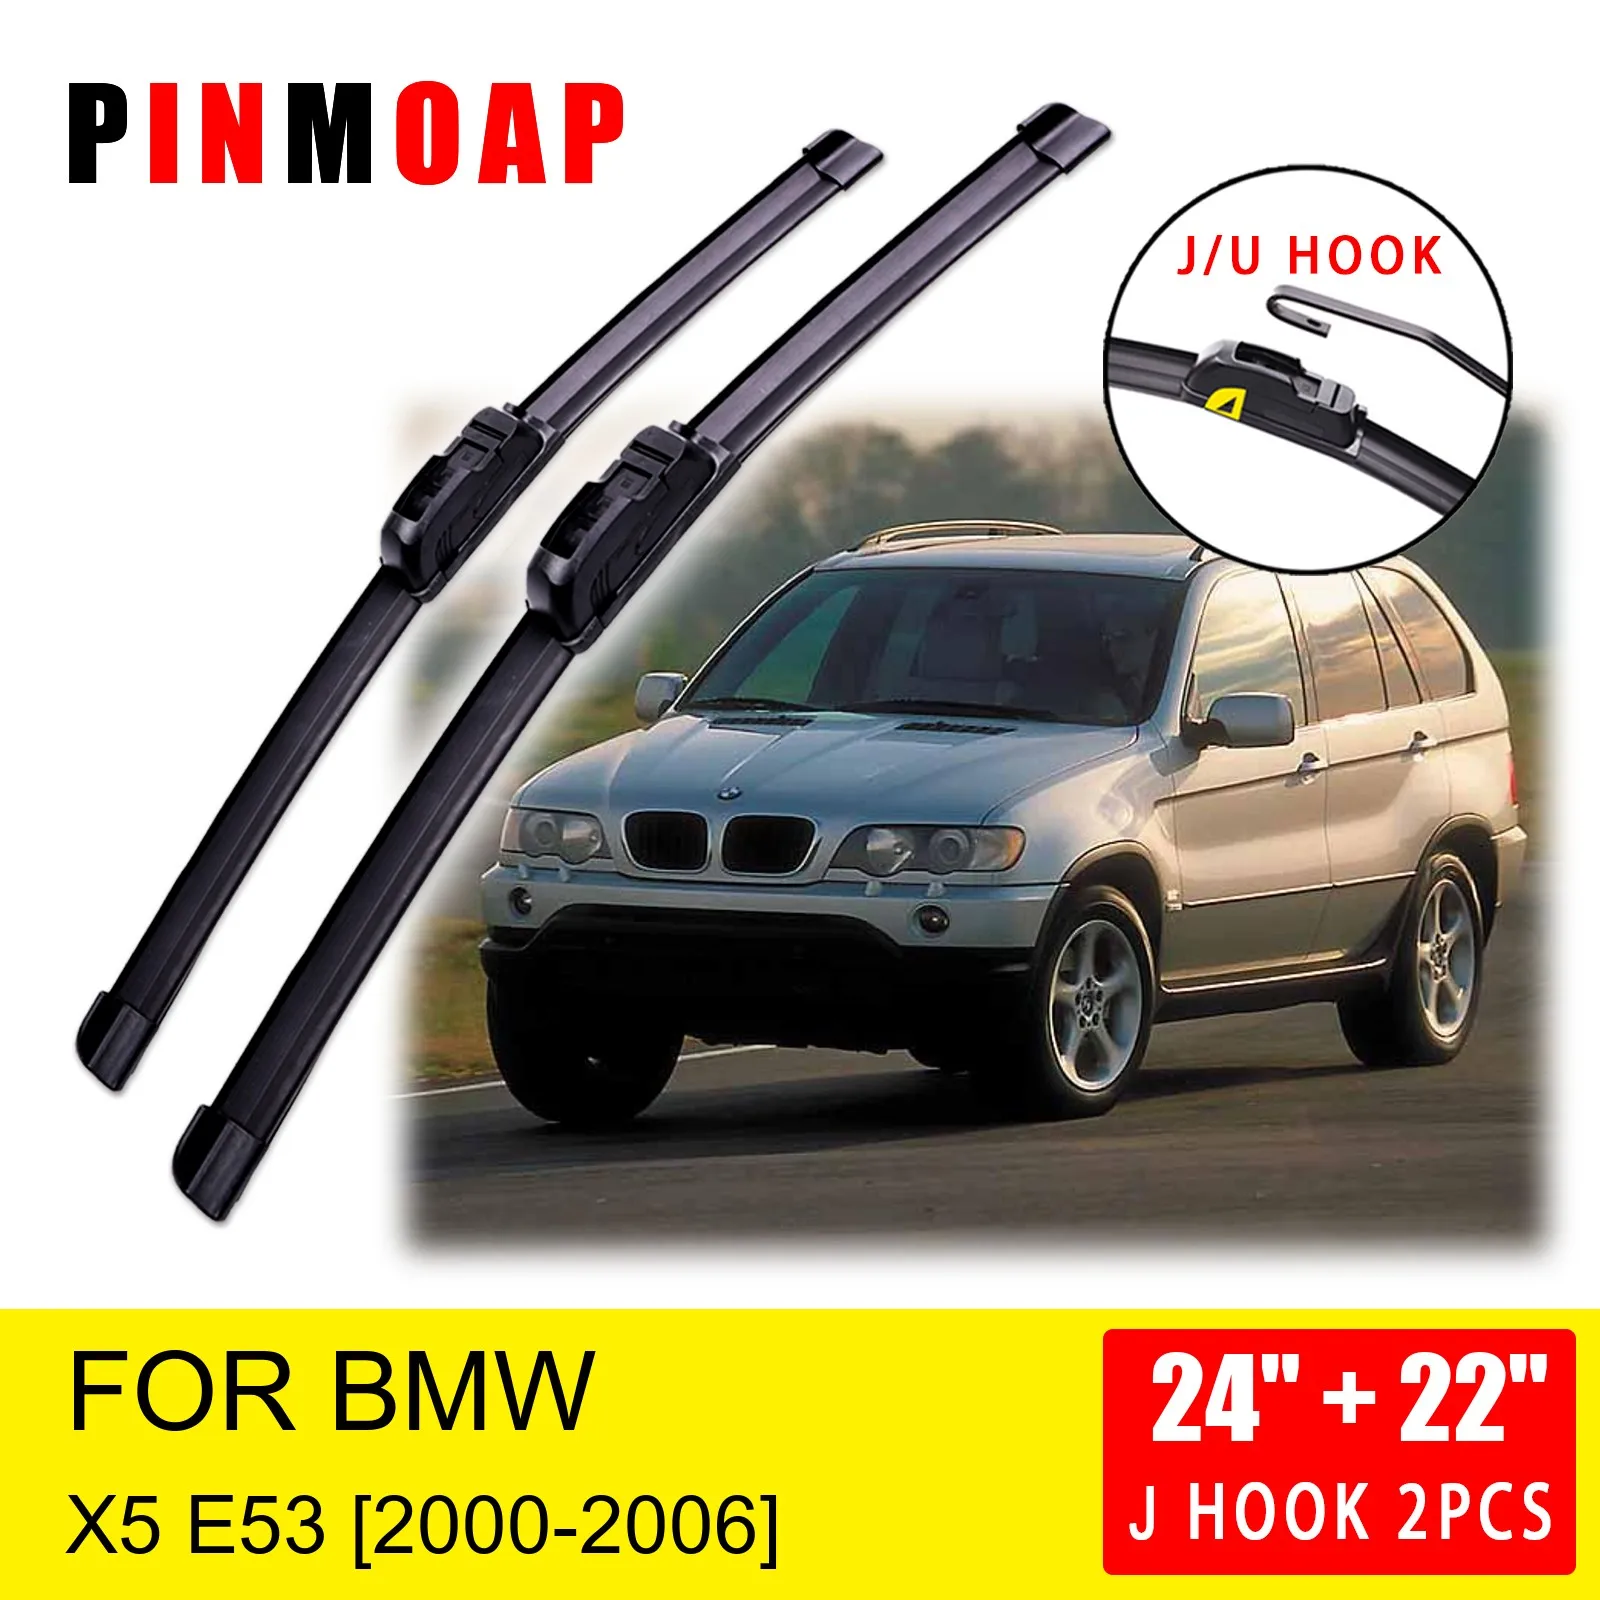 Para BMW X5 E53 2000, 2001, 2002, 2003, 2004, 2005, 2006 limpiaparabrisas delanteros cepillos de accesorios U J gancho